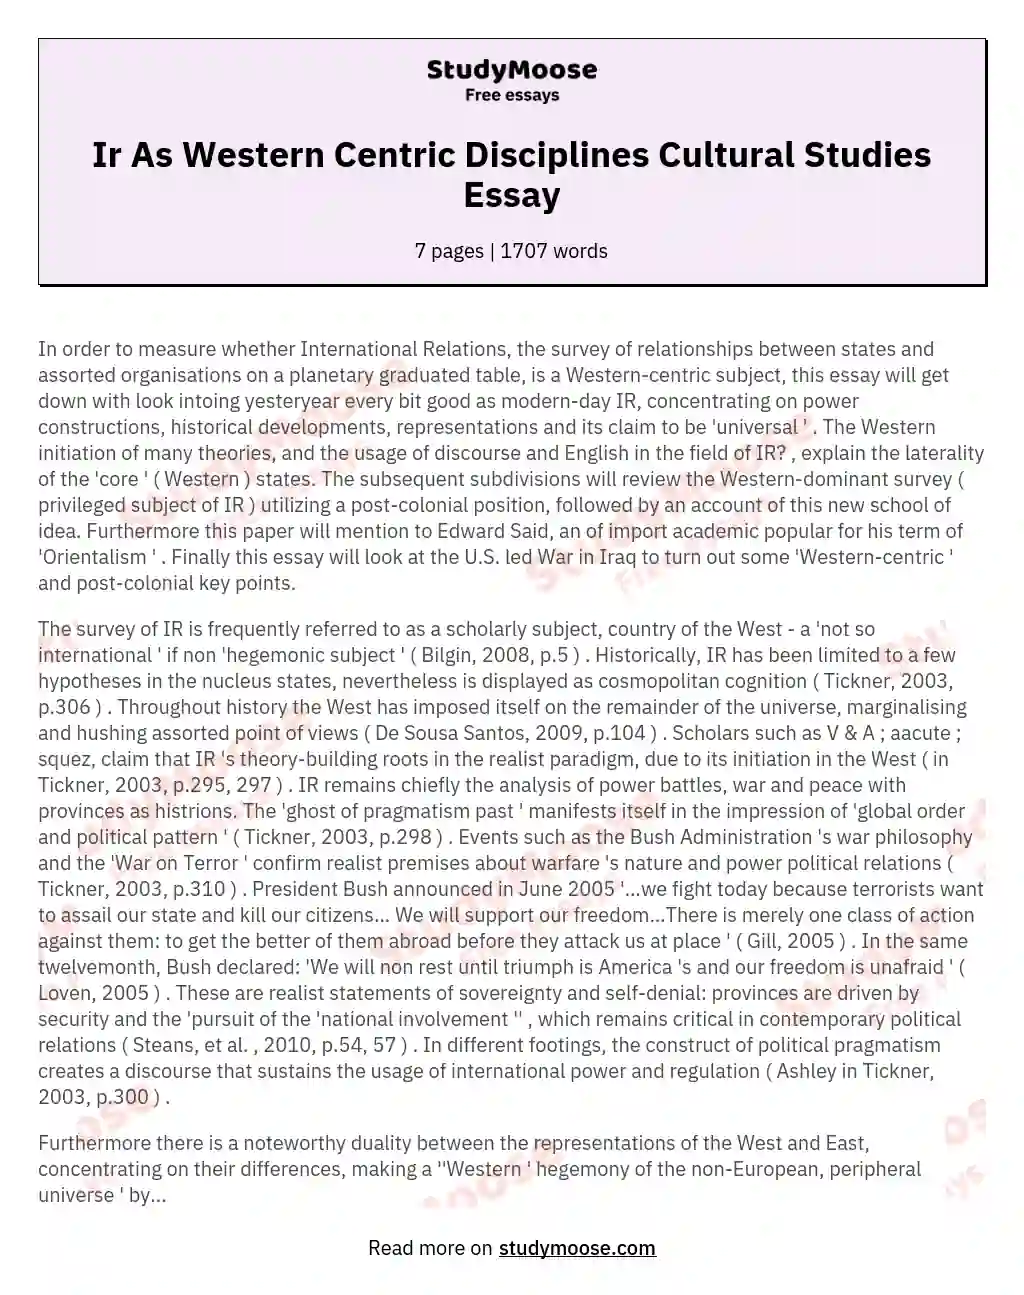 Ir As Western Centric Disciplines Cultural Studies Essay essay